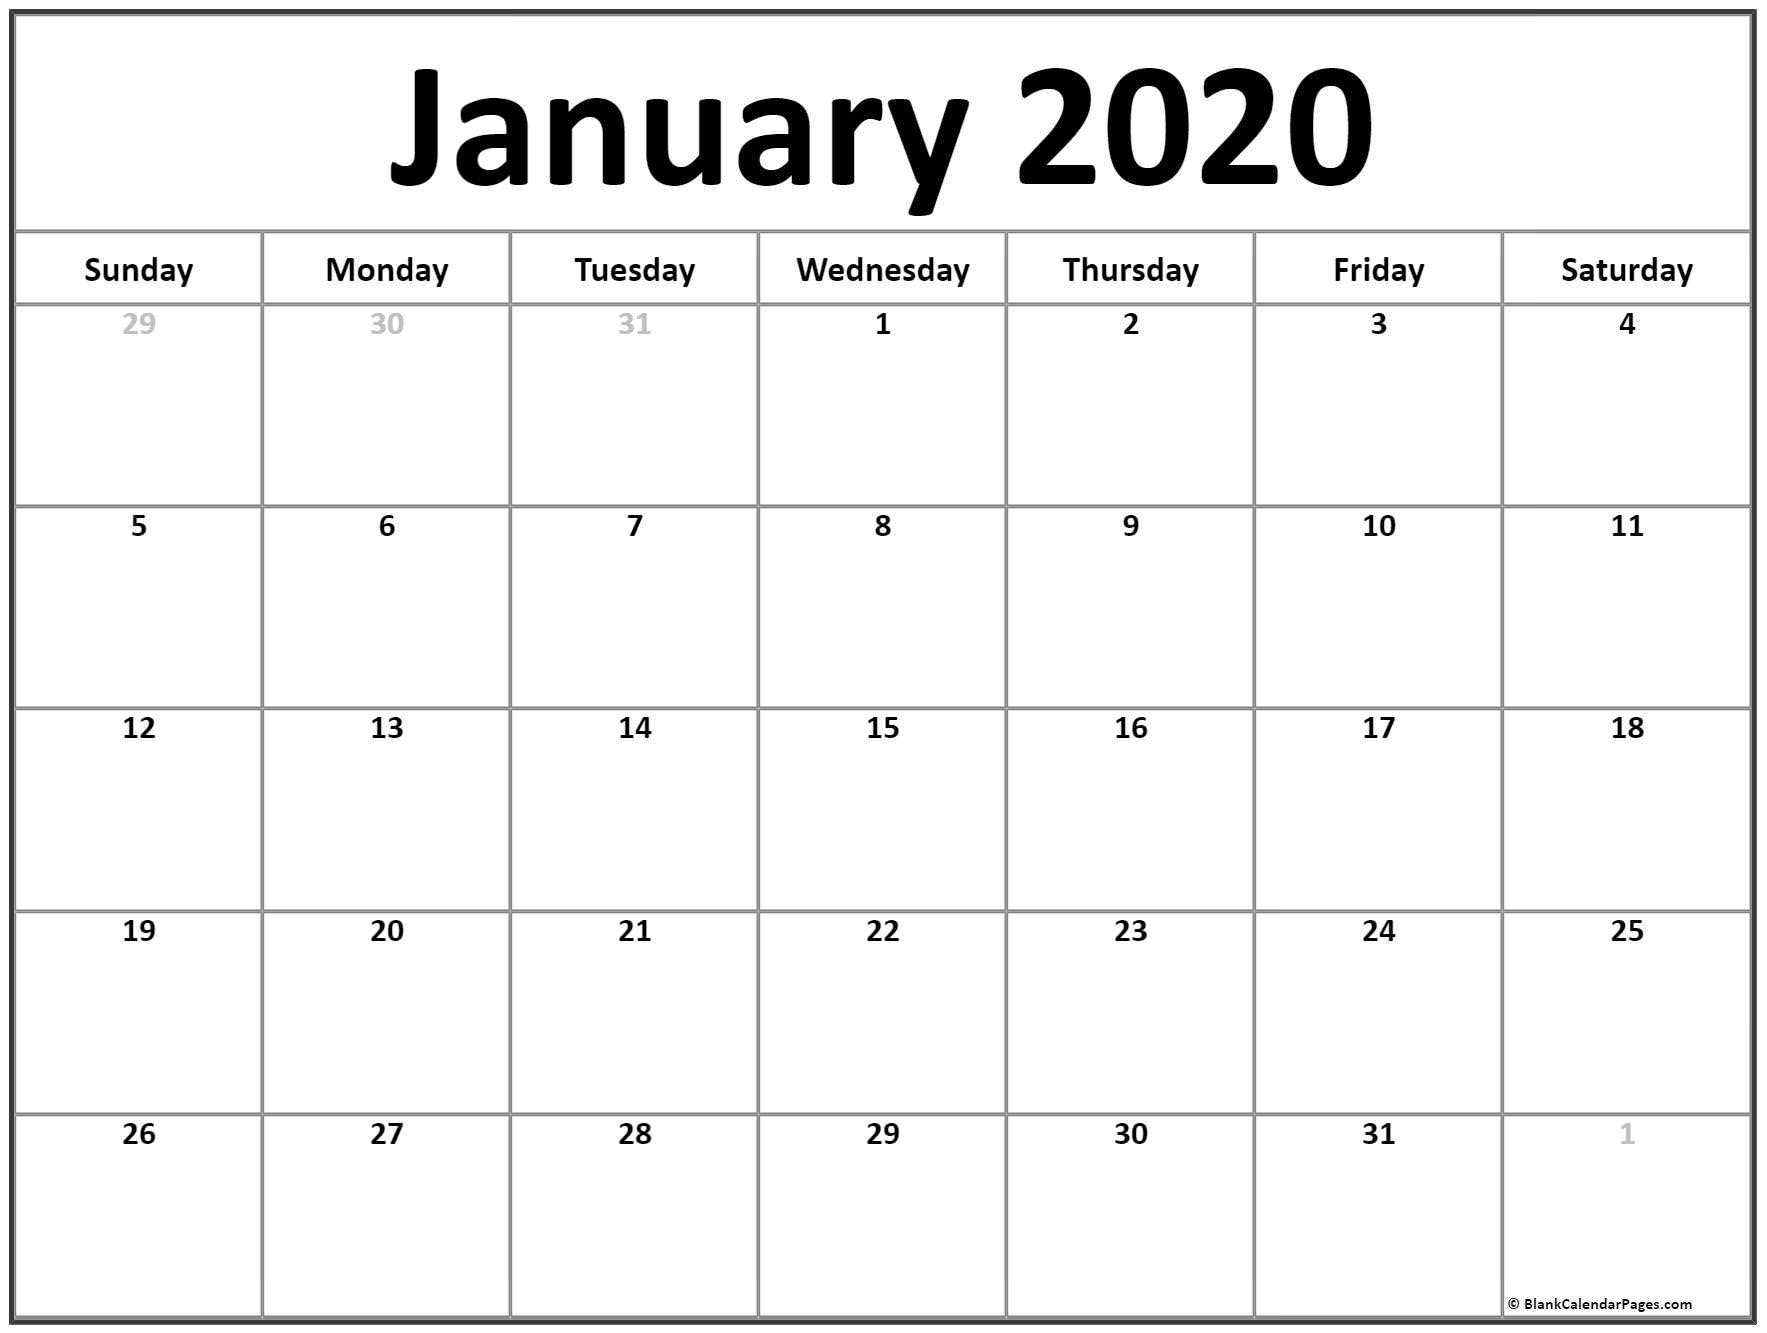 January Calendar 2020 Template - Togo.wpart.co